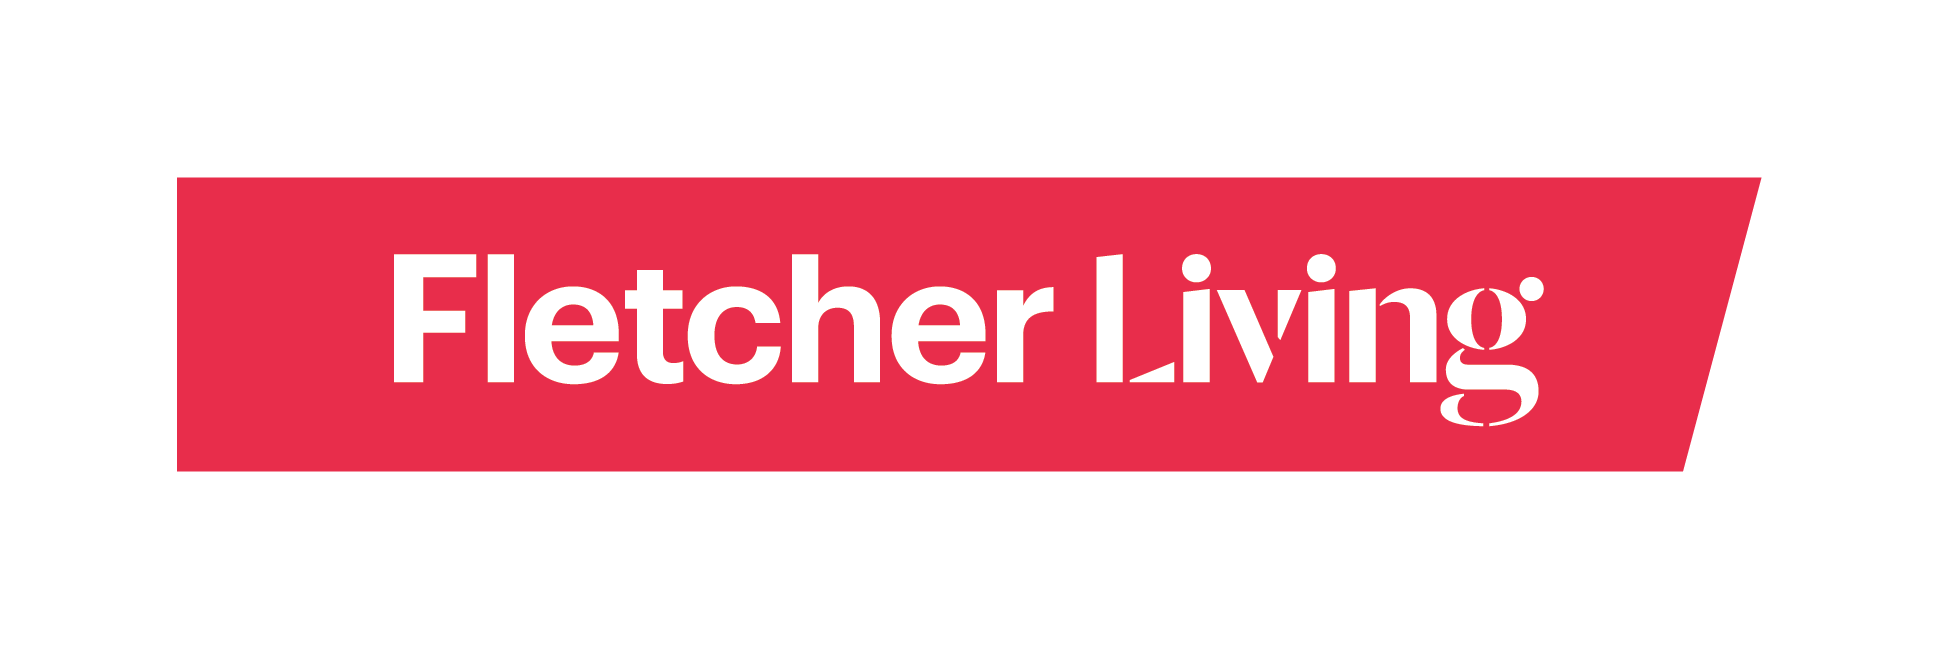 Fletcher Living logo